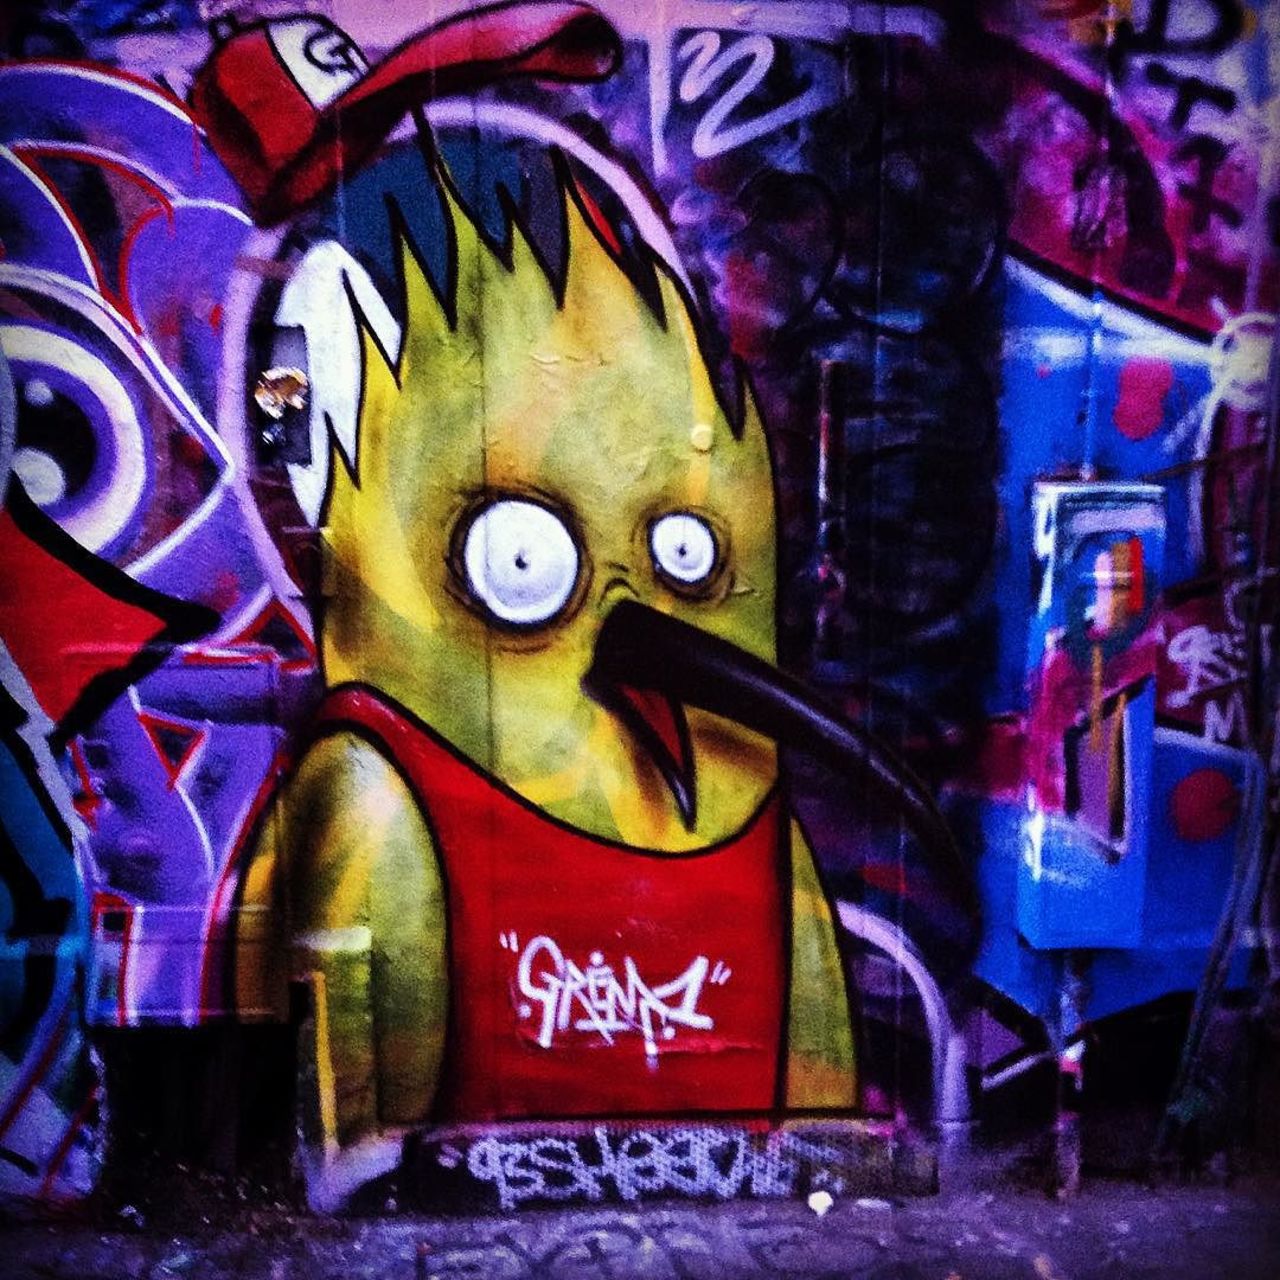 #Paris #graffiti photo by @stefetlinda http://ift.tt/1GFt3Bn #StreetArt https://t.co/7TAA81uPtm